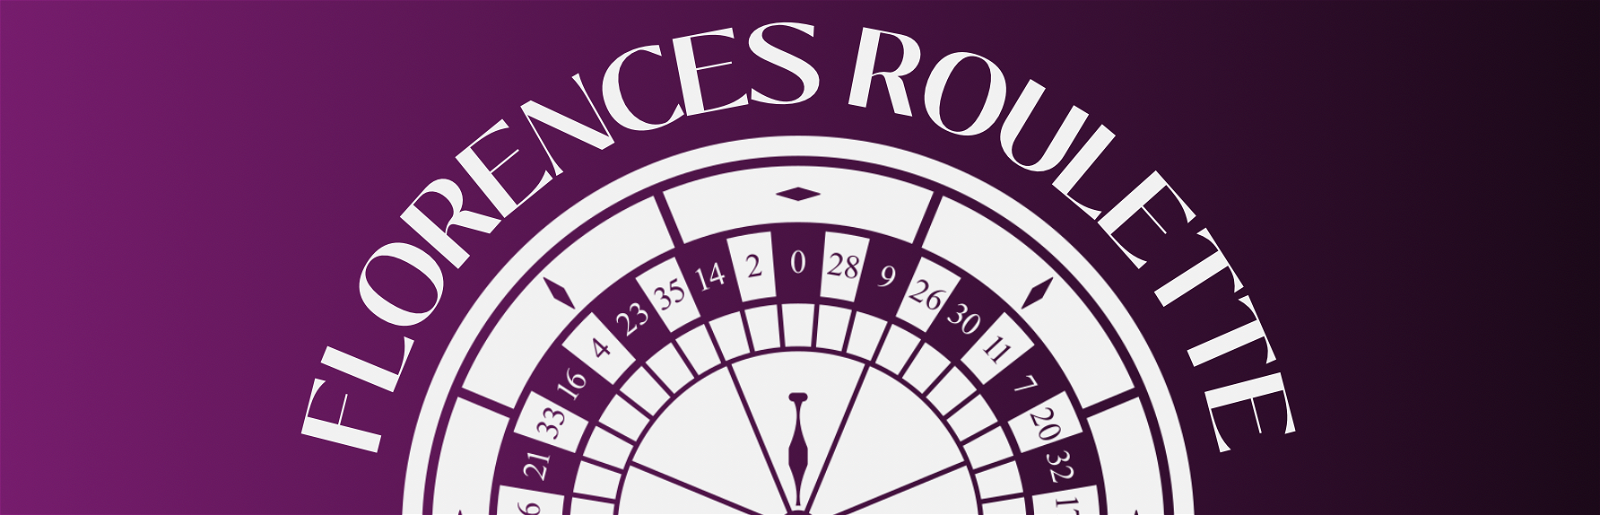 Florences Roulette - Baggrundshistorien